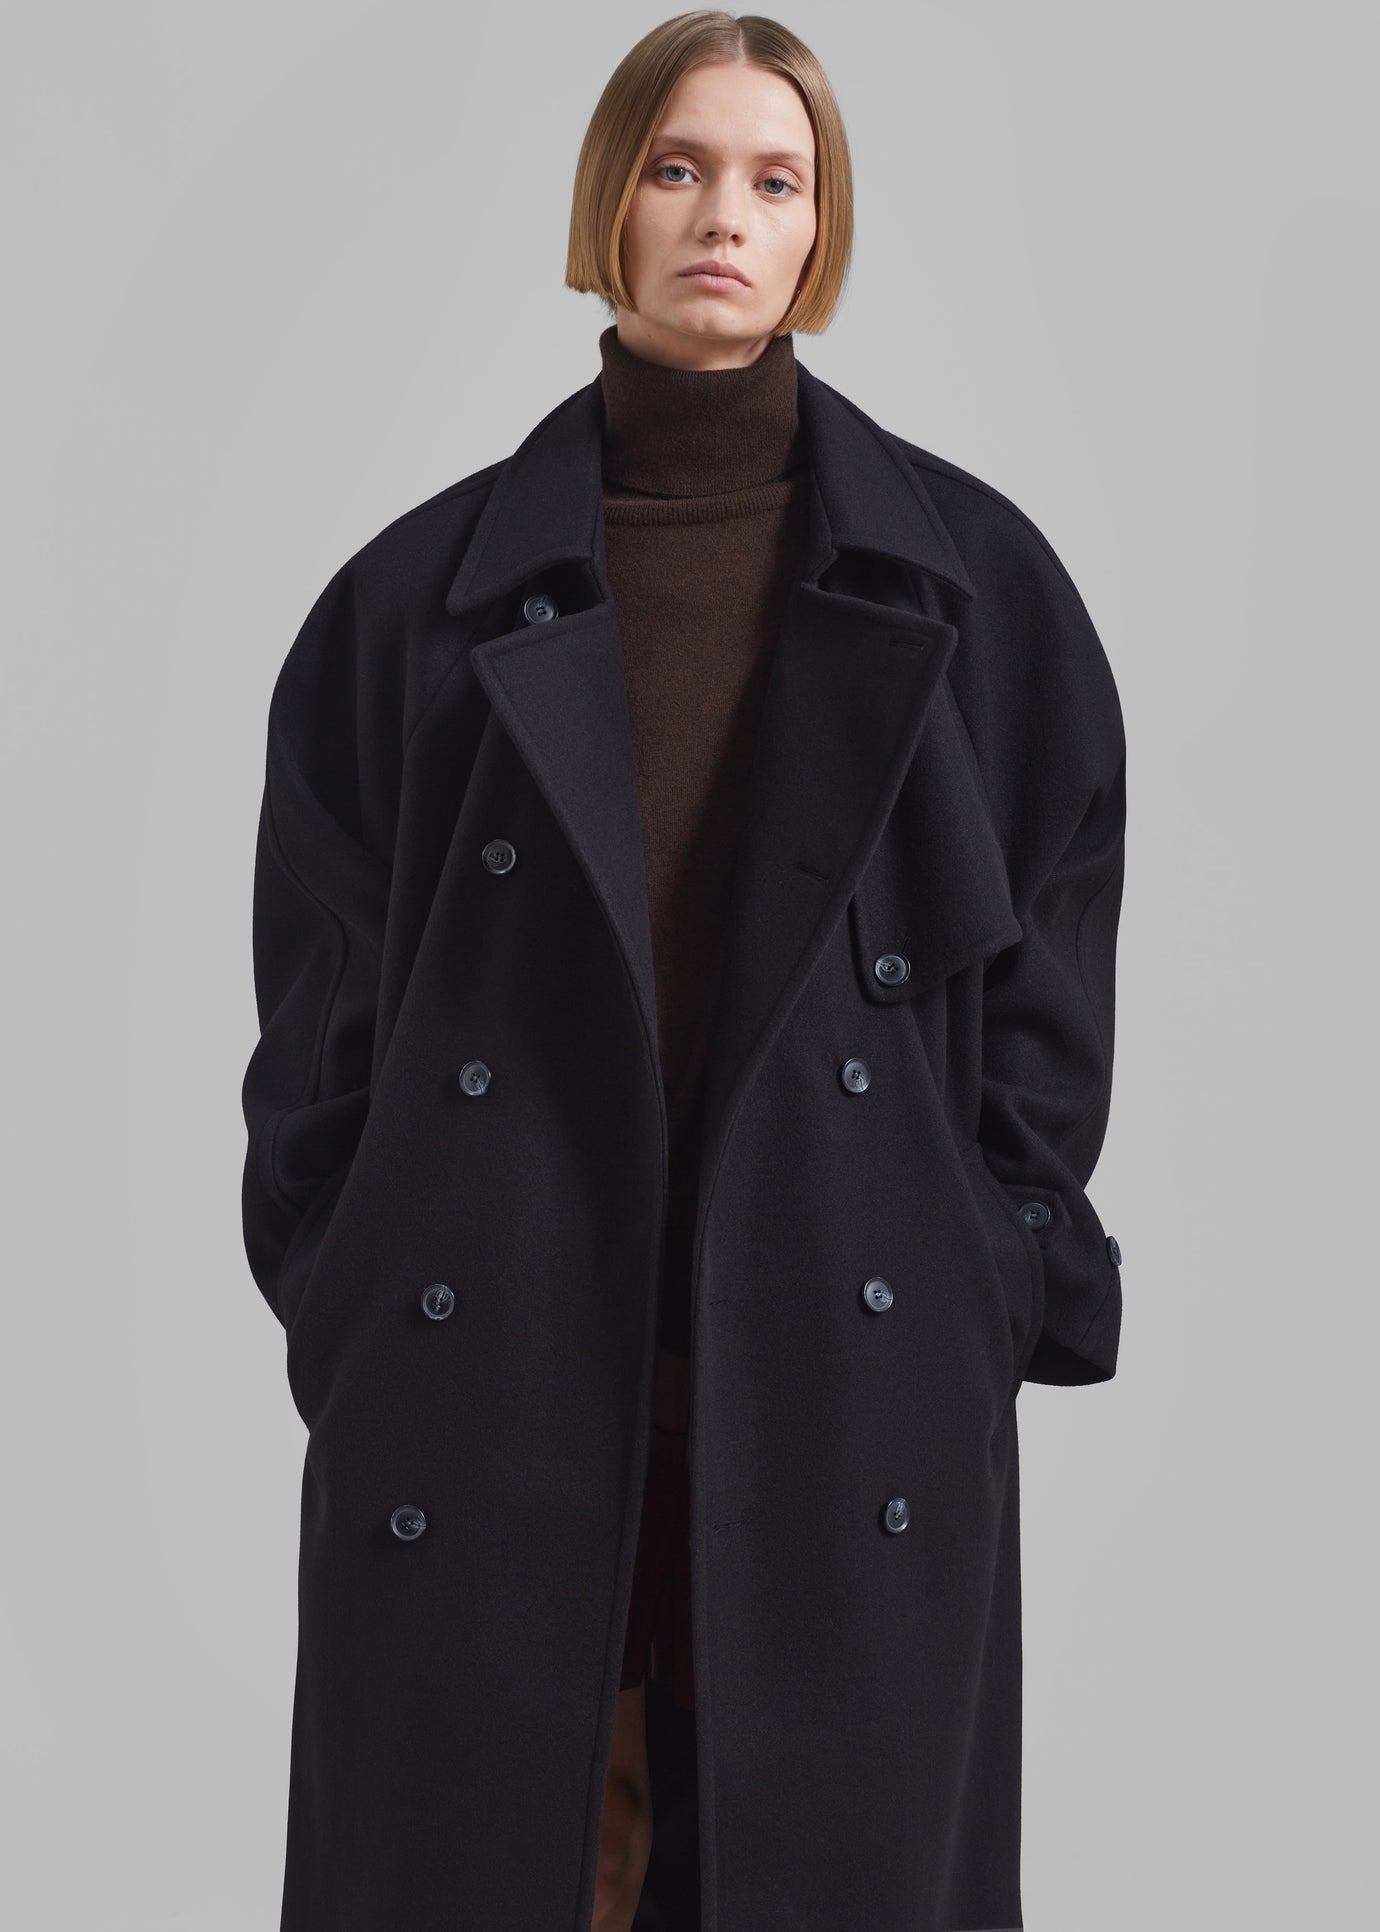 Women\'s Coats, Jackets, Trench & Blazer – Page 2 – The Frankie Shop